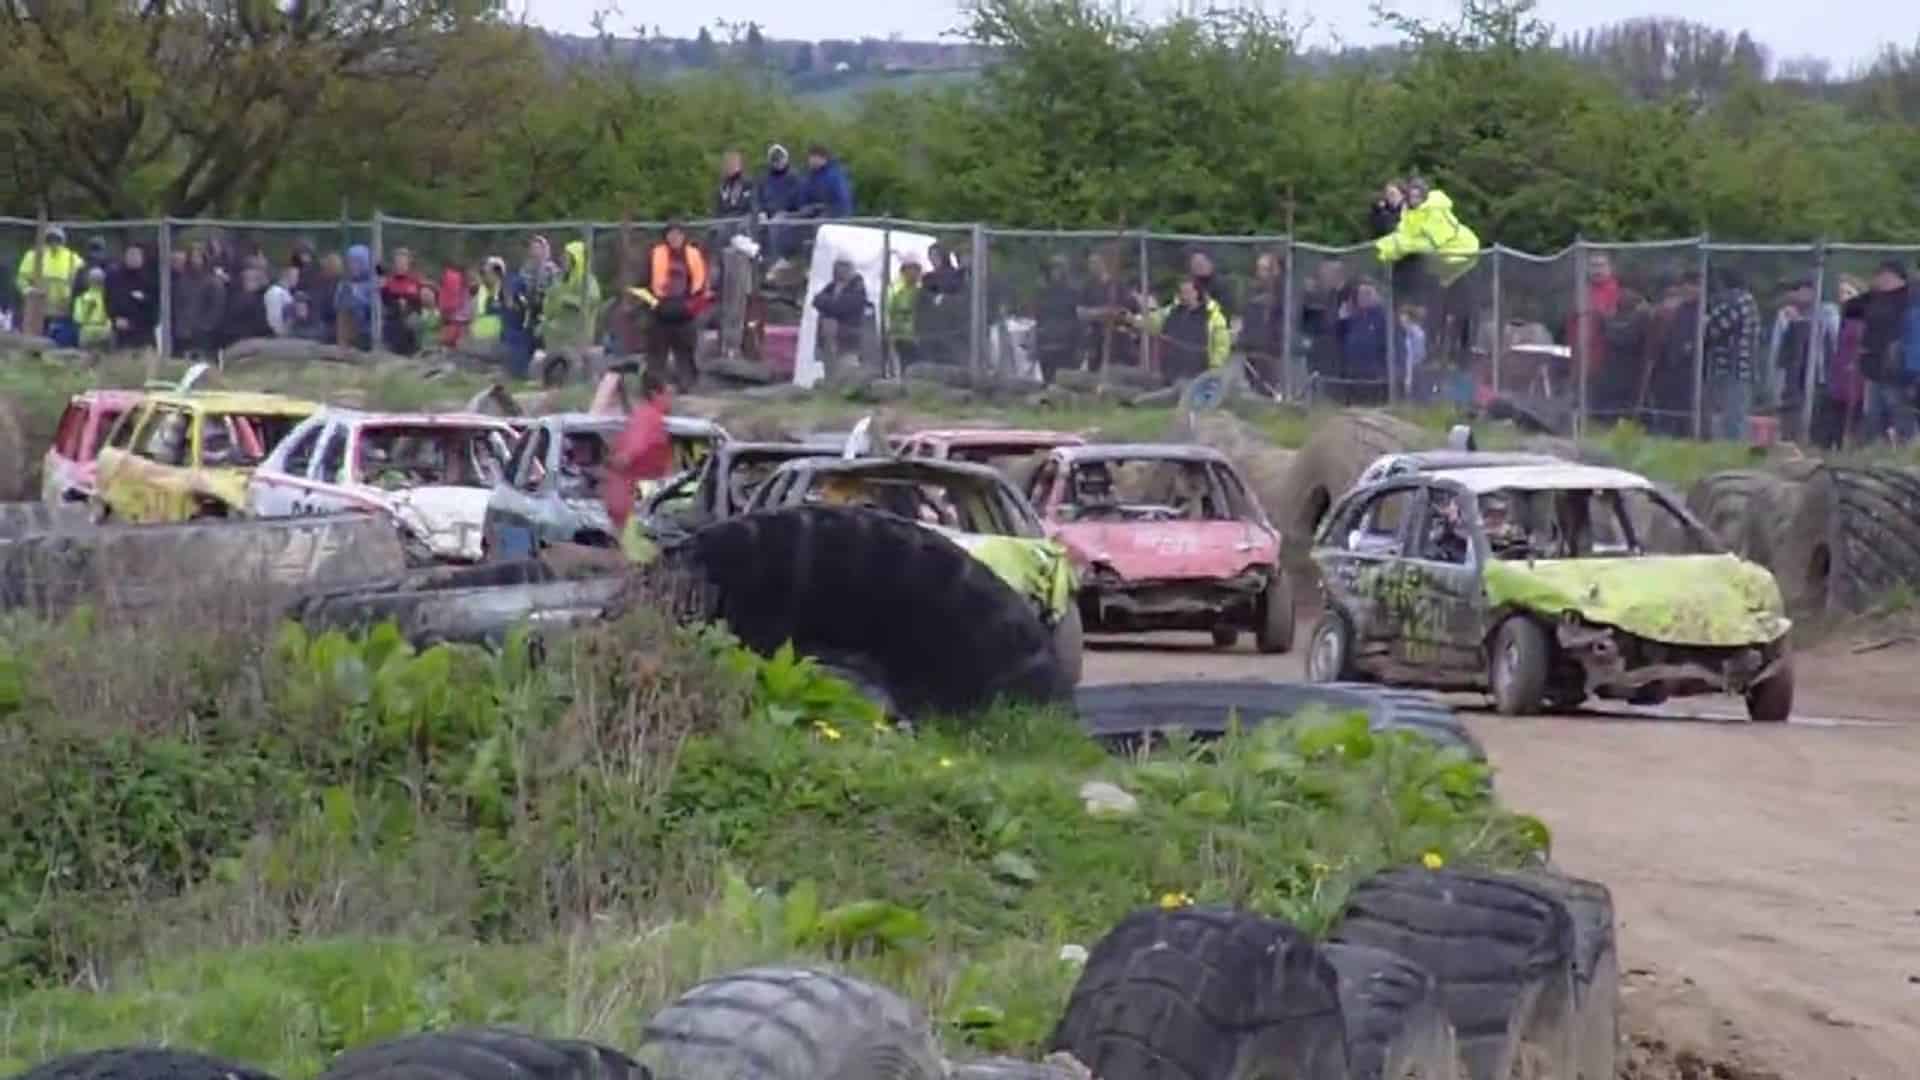 Brampton Raceway in UK